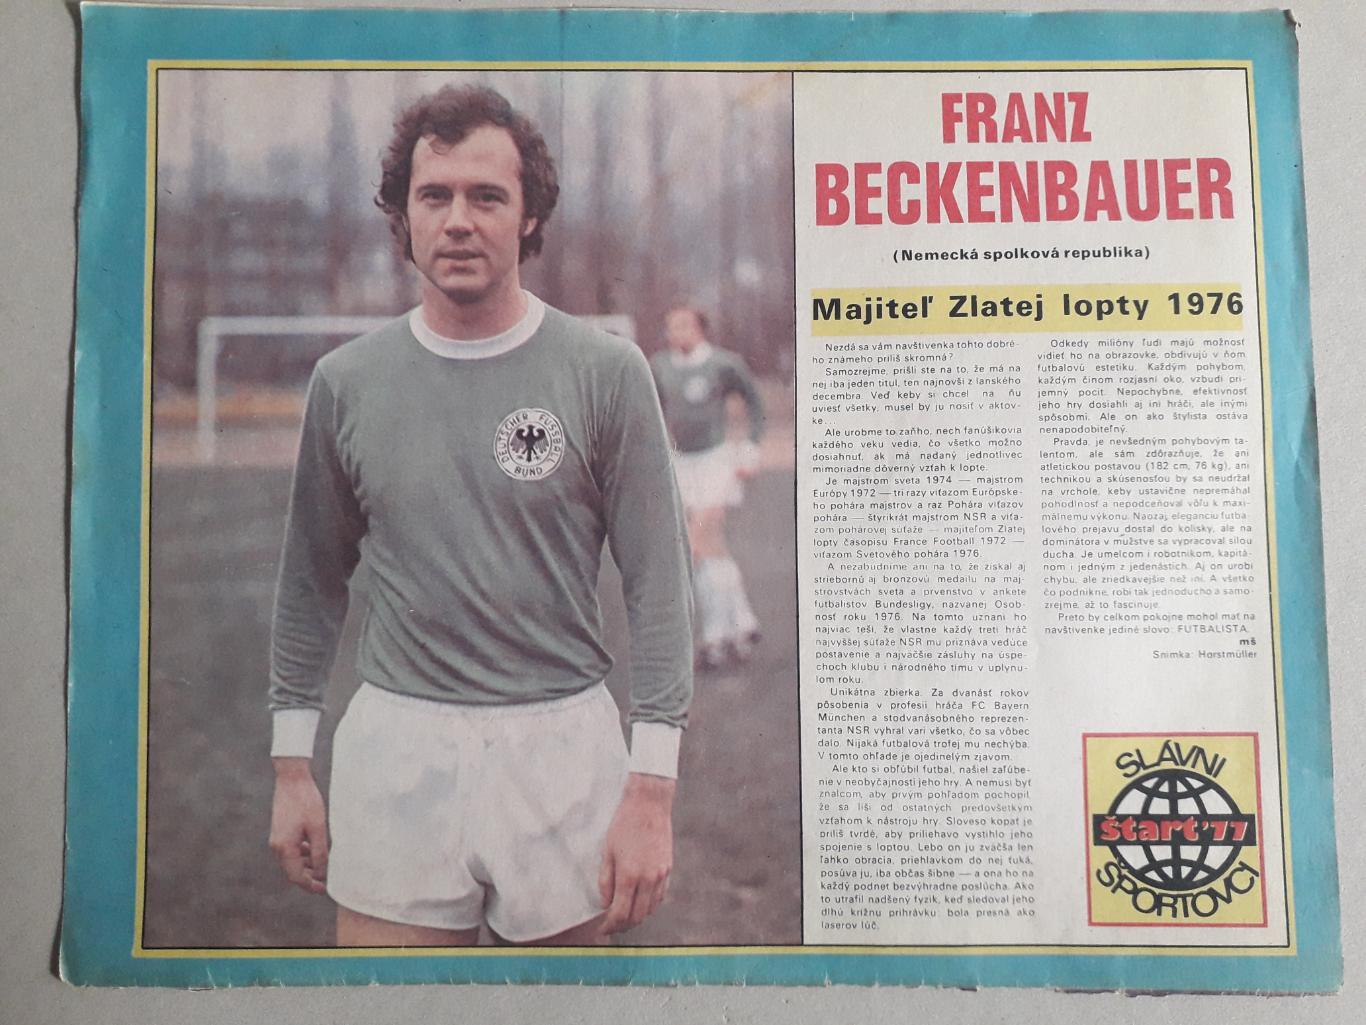 Плакат из журнала Start- Beckenbauer